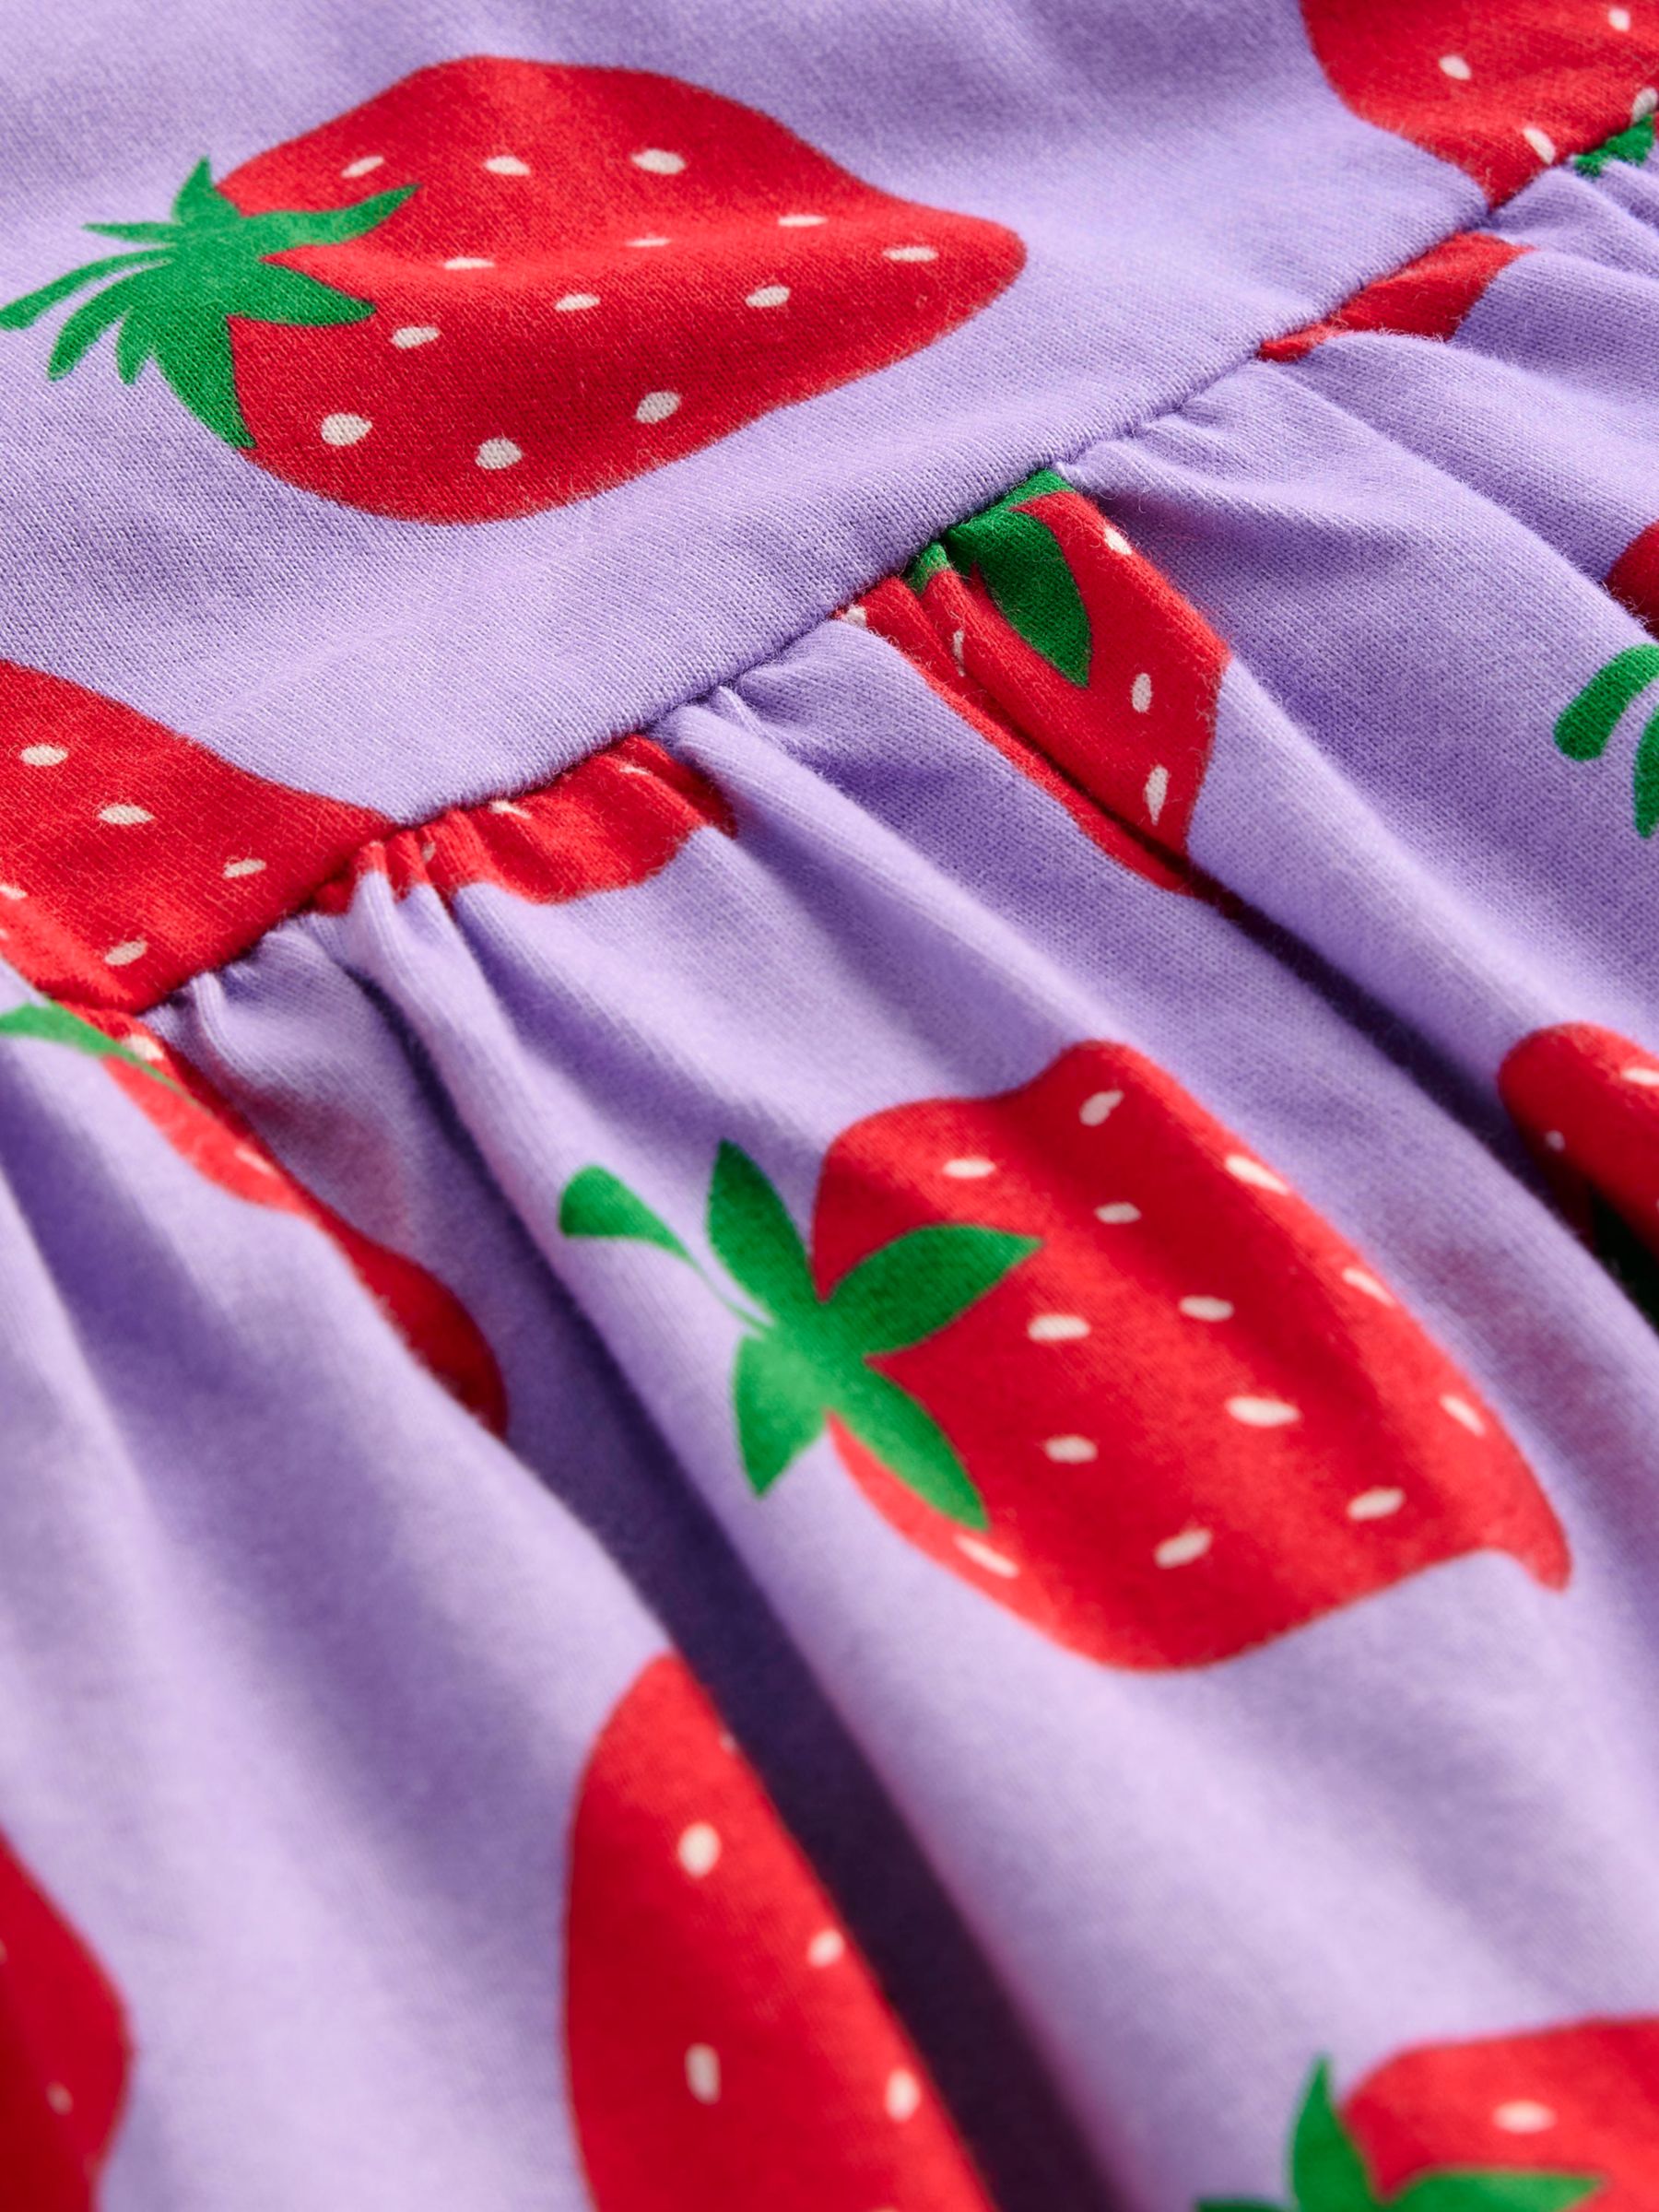 Buy Mini Boden Kids' Short Sleeved Strawberry Fun Jersey Dress, Violet Online at johnlewis.com